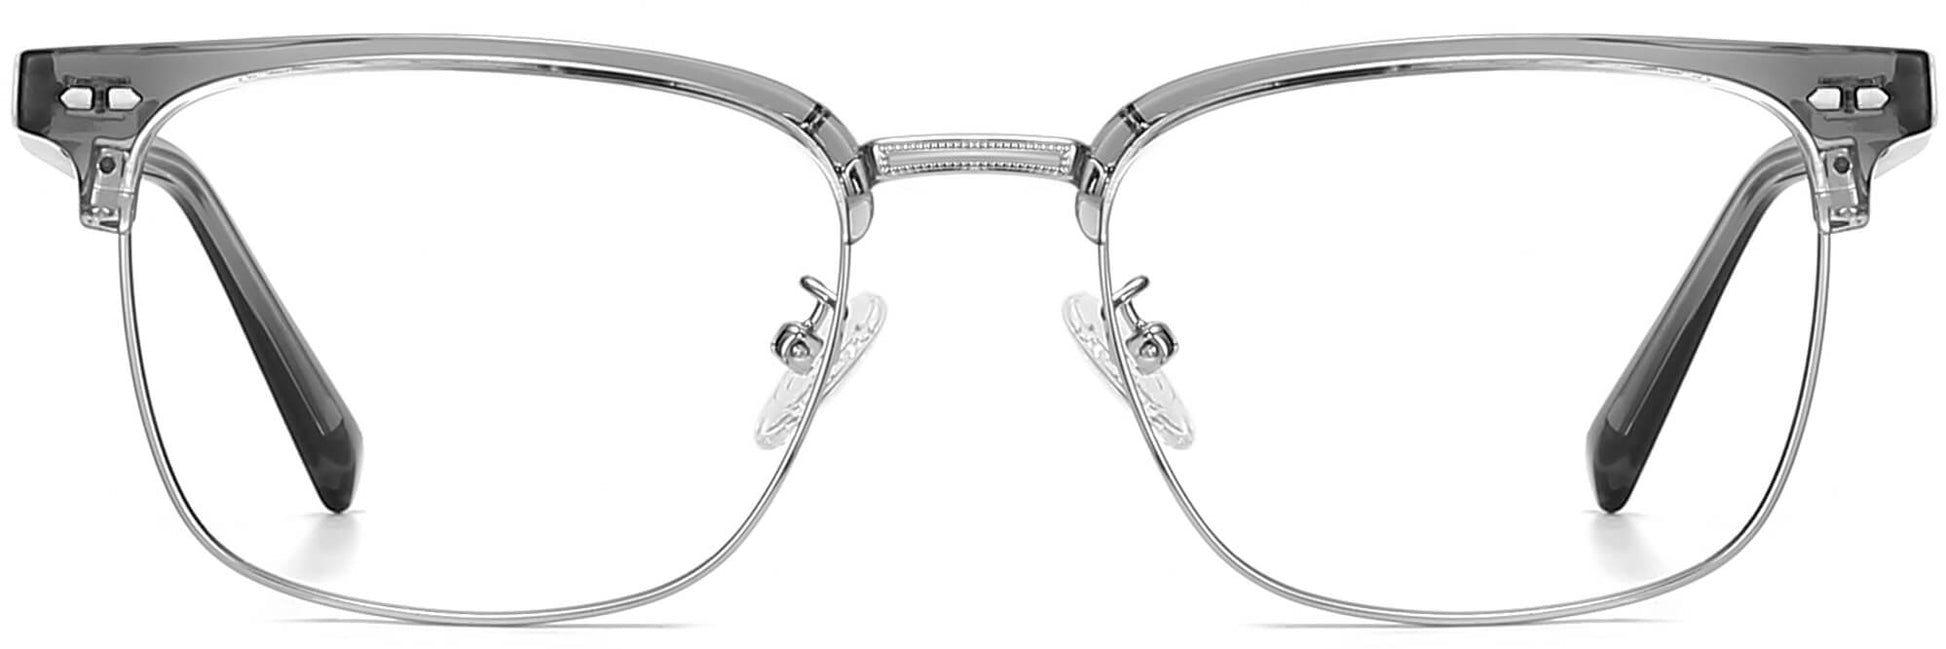 Dalton Browline Gray Eyeglasses from ANRRI, front view